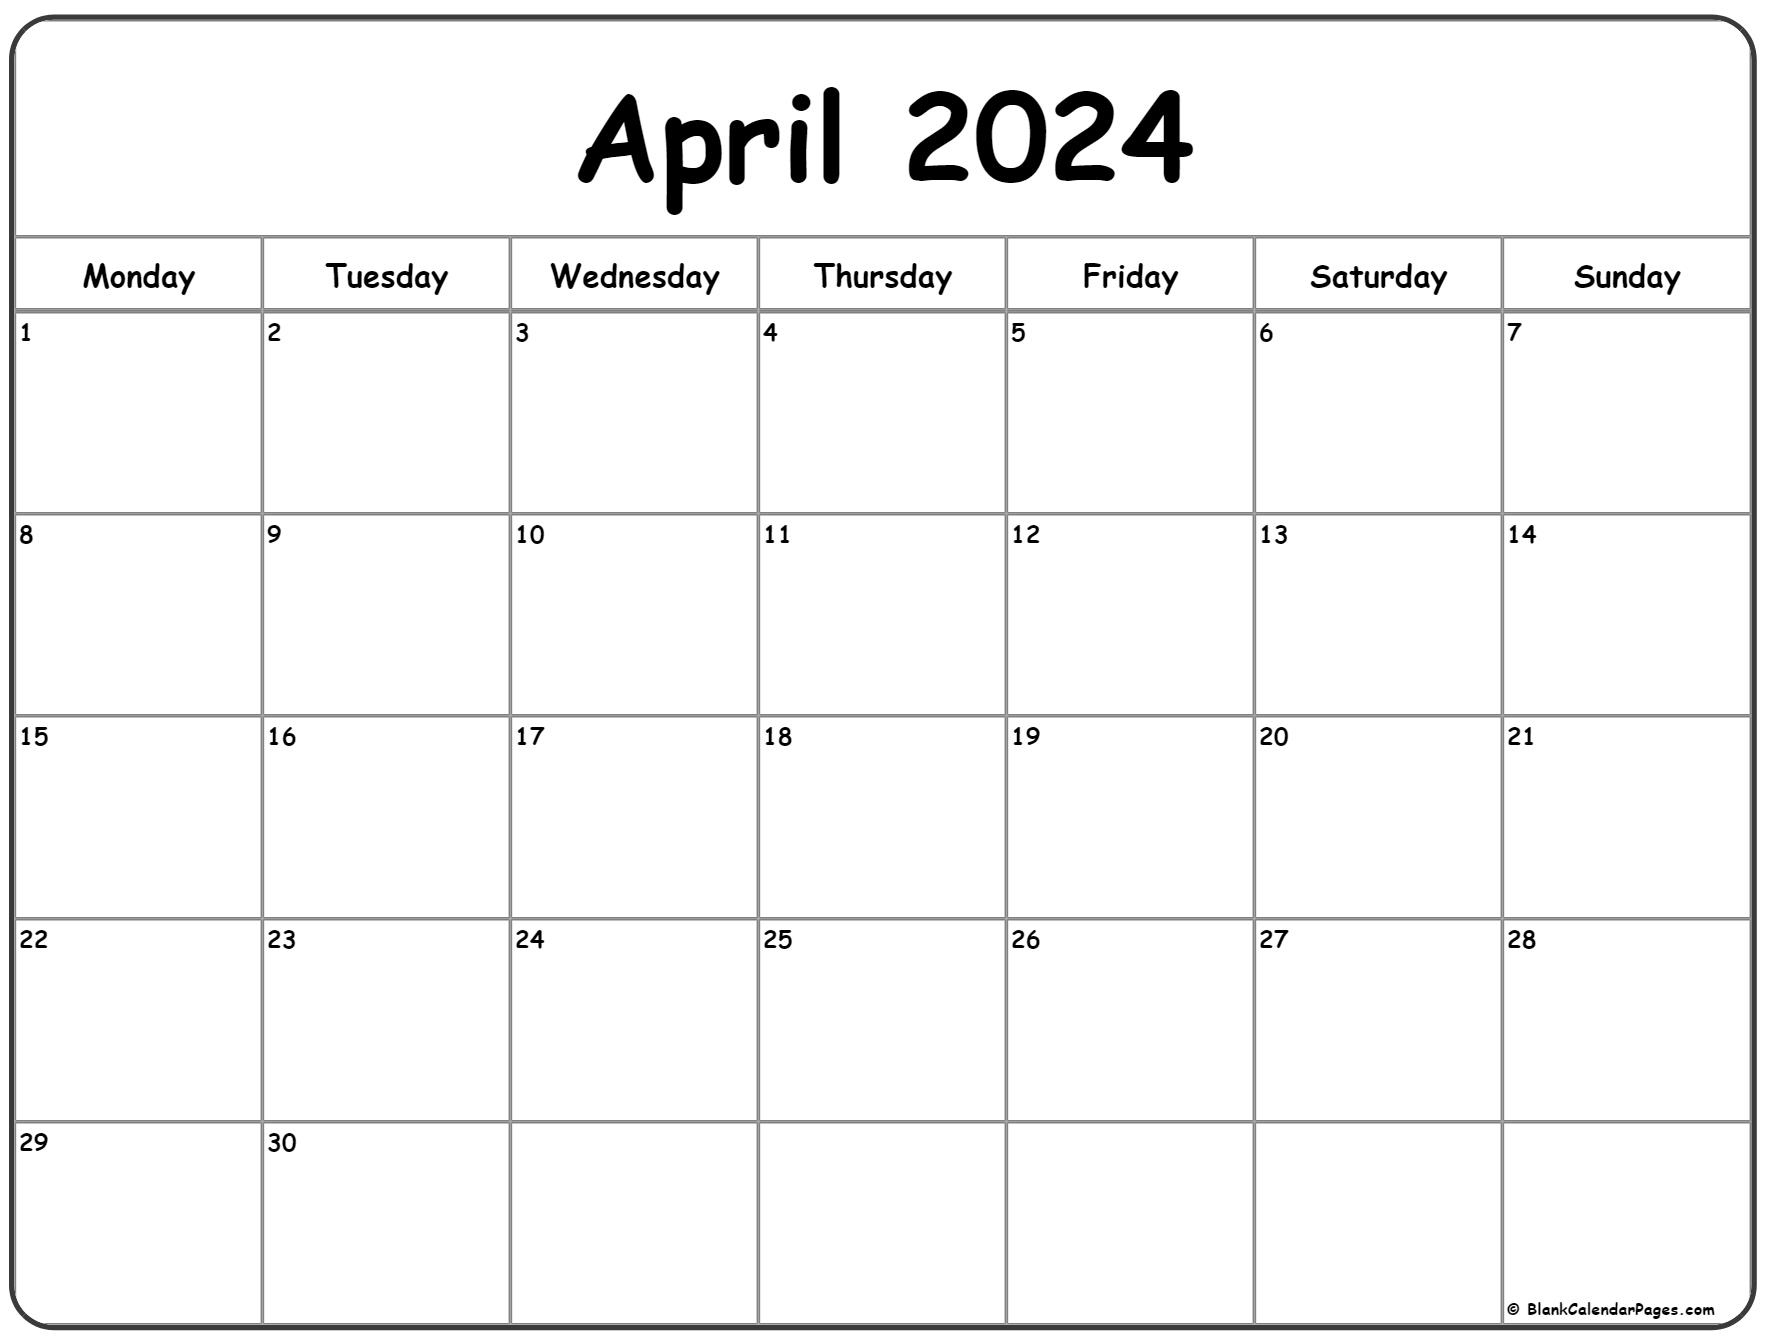 April 2024 Printable Calendar | Calendar 2024 | Printable Calendar 2024